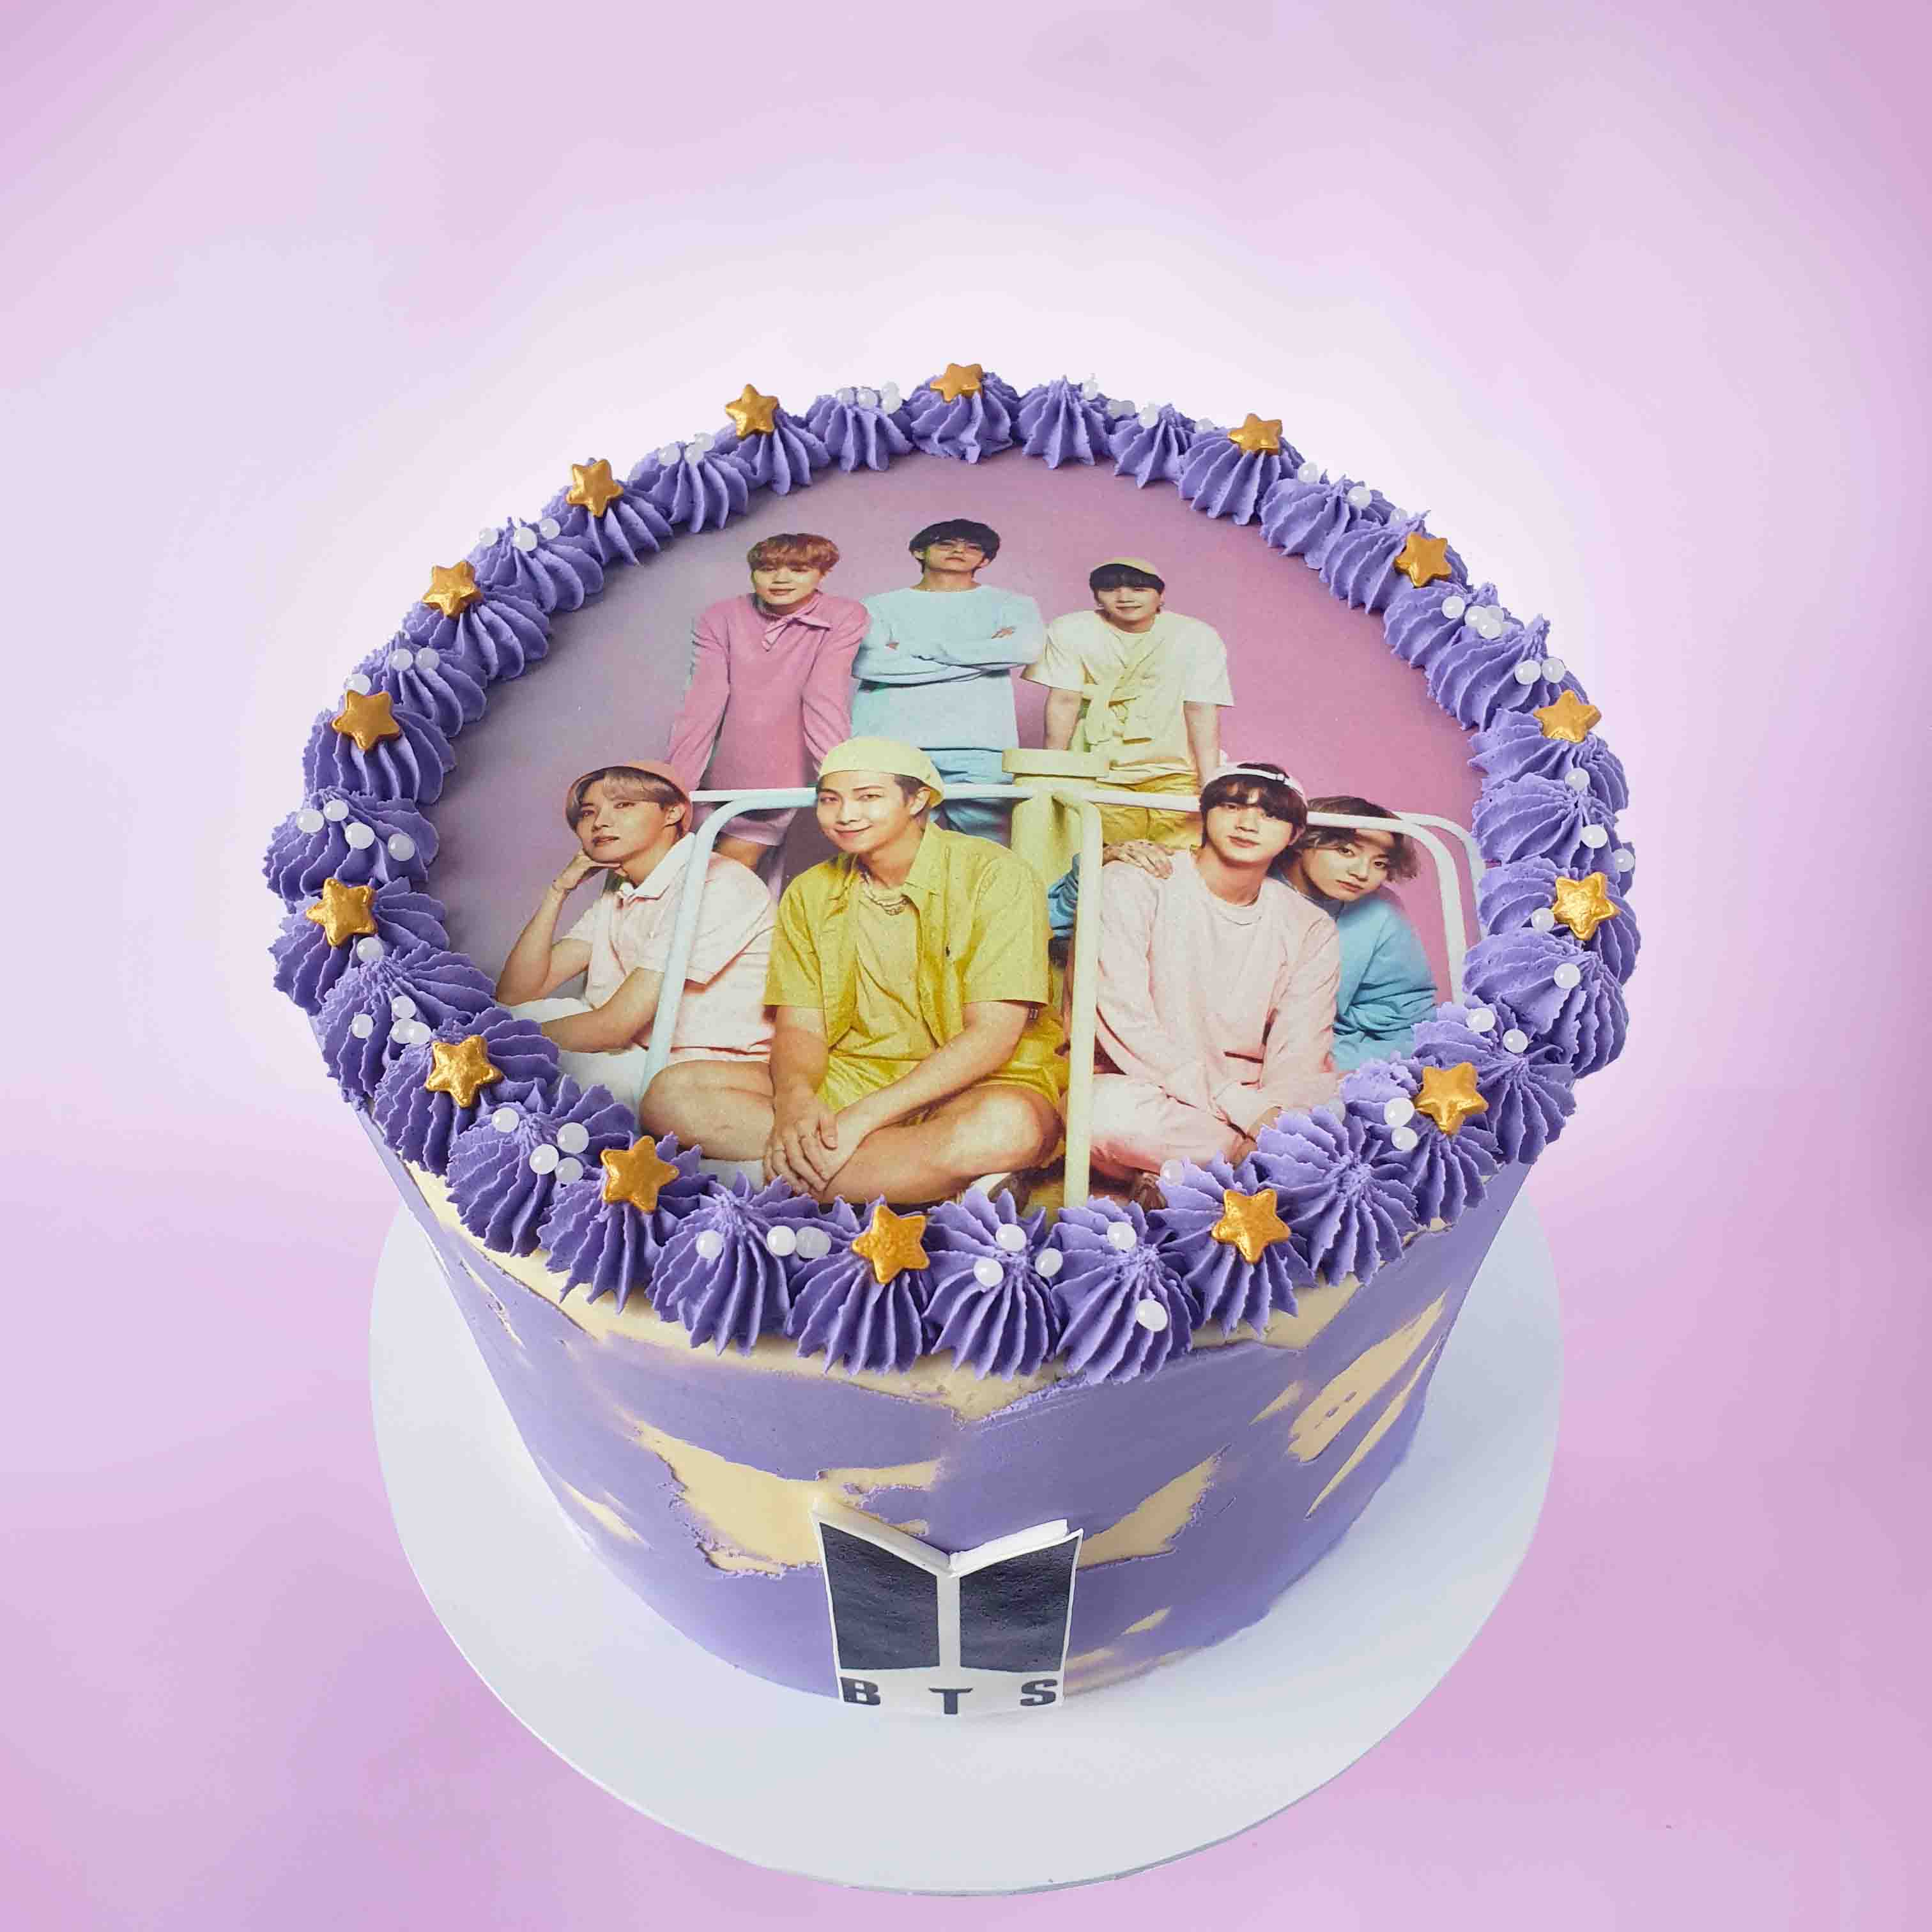 BTS Cake - My Bake Studio